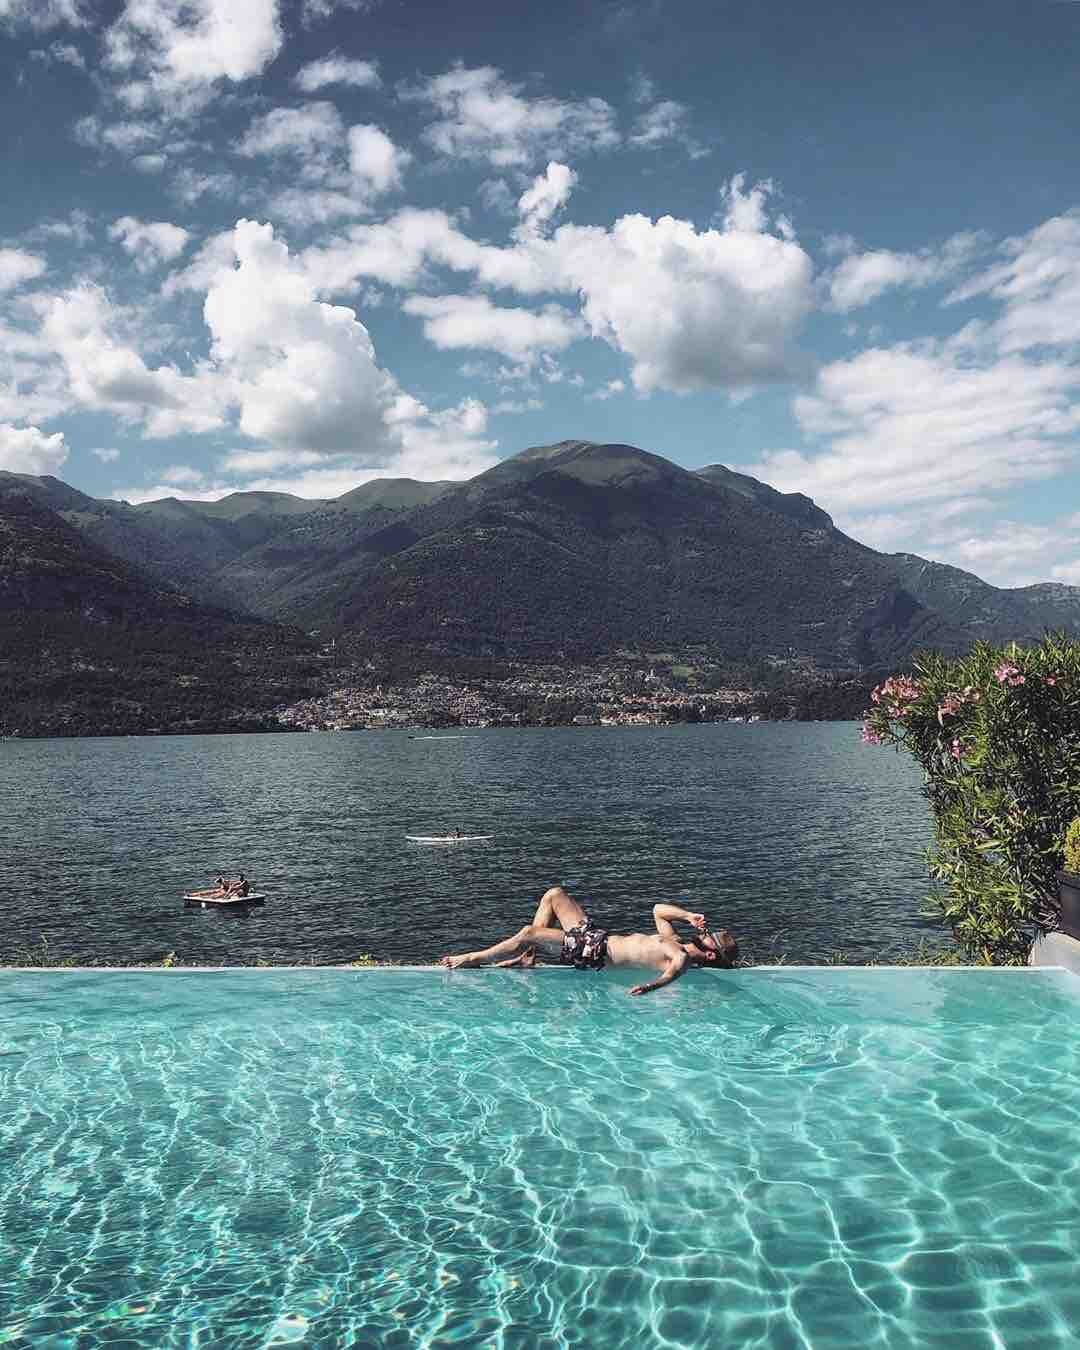 Grand Hotel Tremezzo, Historic Hotels Worldwide in Lake Como, Italy